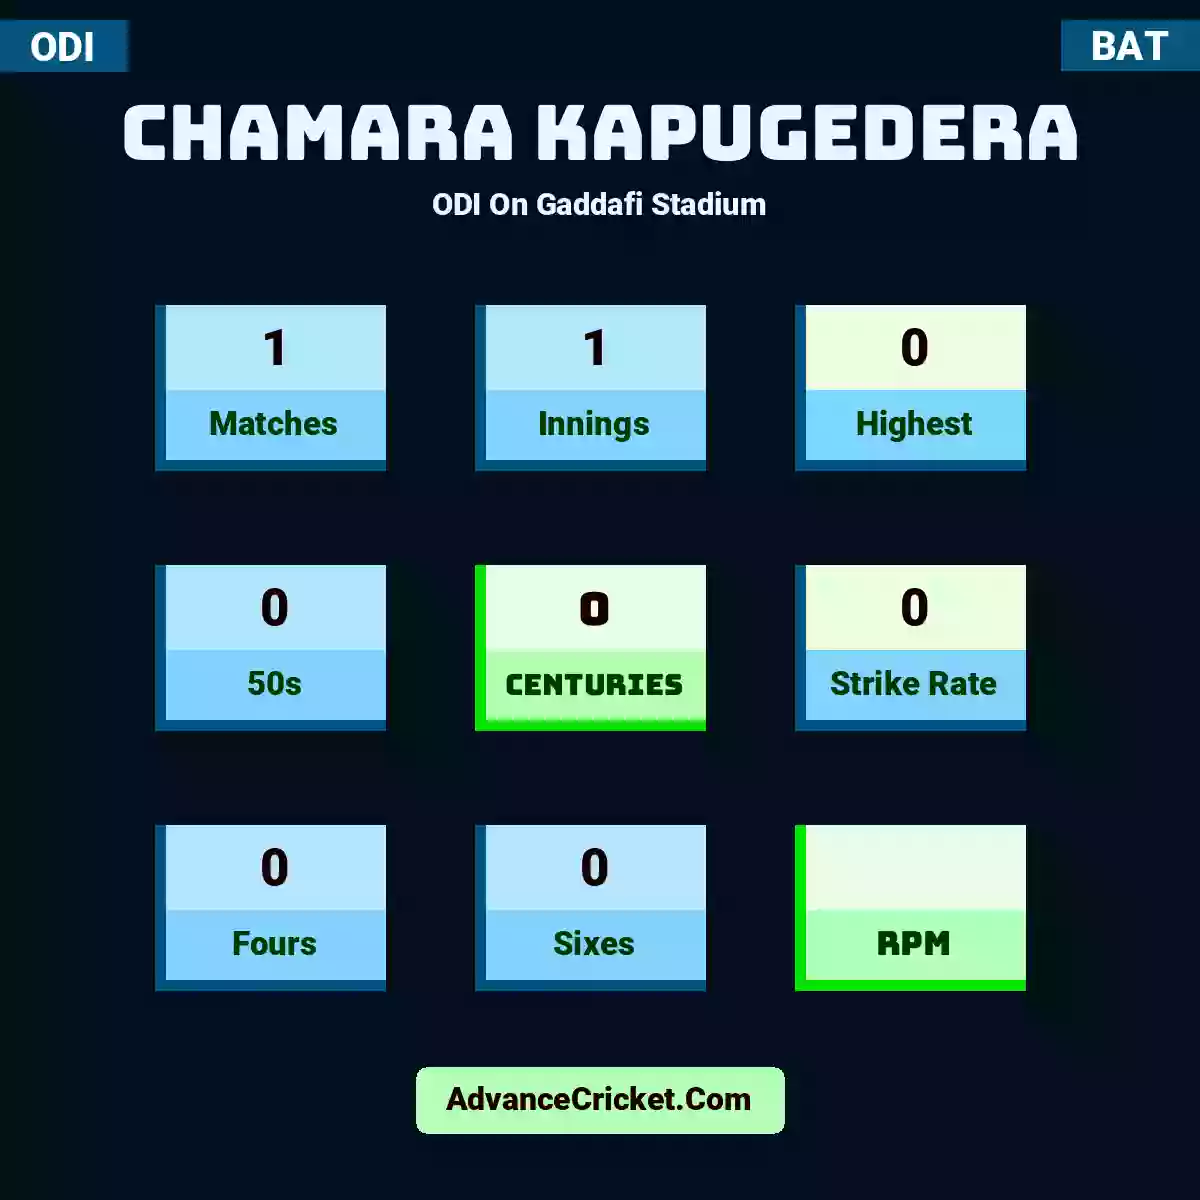 Chamara Kapugedera ODI  On Gaddafi Stadium, Chamara Kapugedera played 1 matches, scored 0 runs as highest, 0 half-centuries, and 0 centuries, with a strike rate of 0. C.Kapugedera hit 0 fours and 0 sixes.